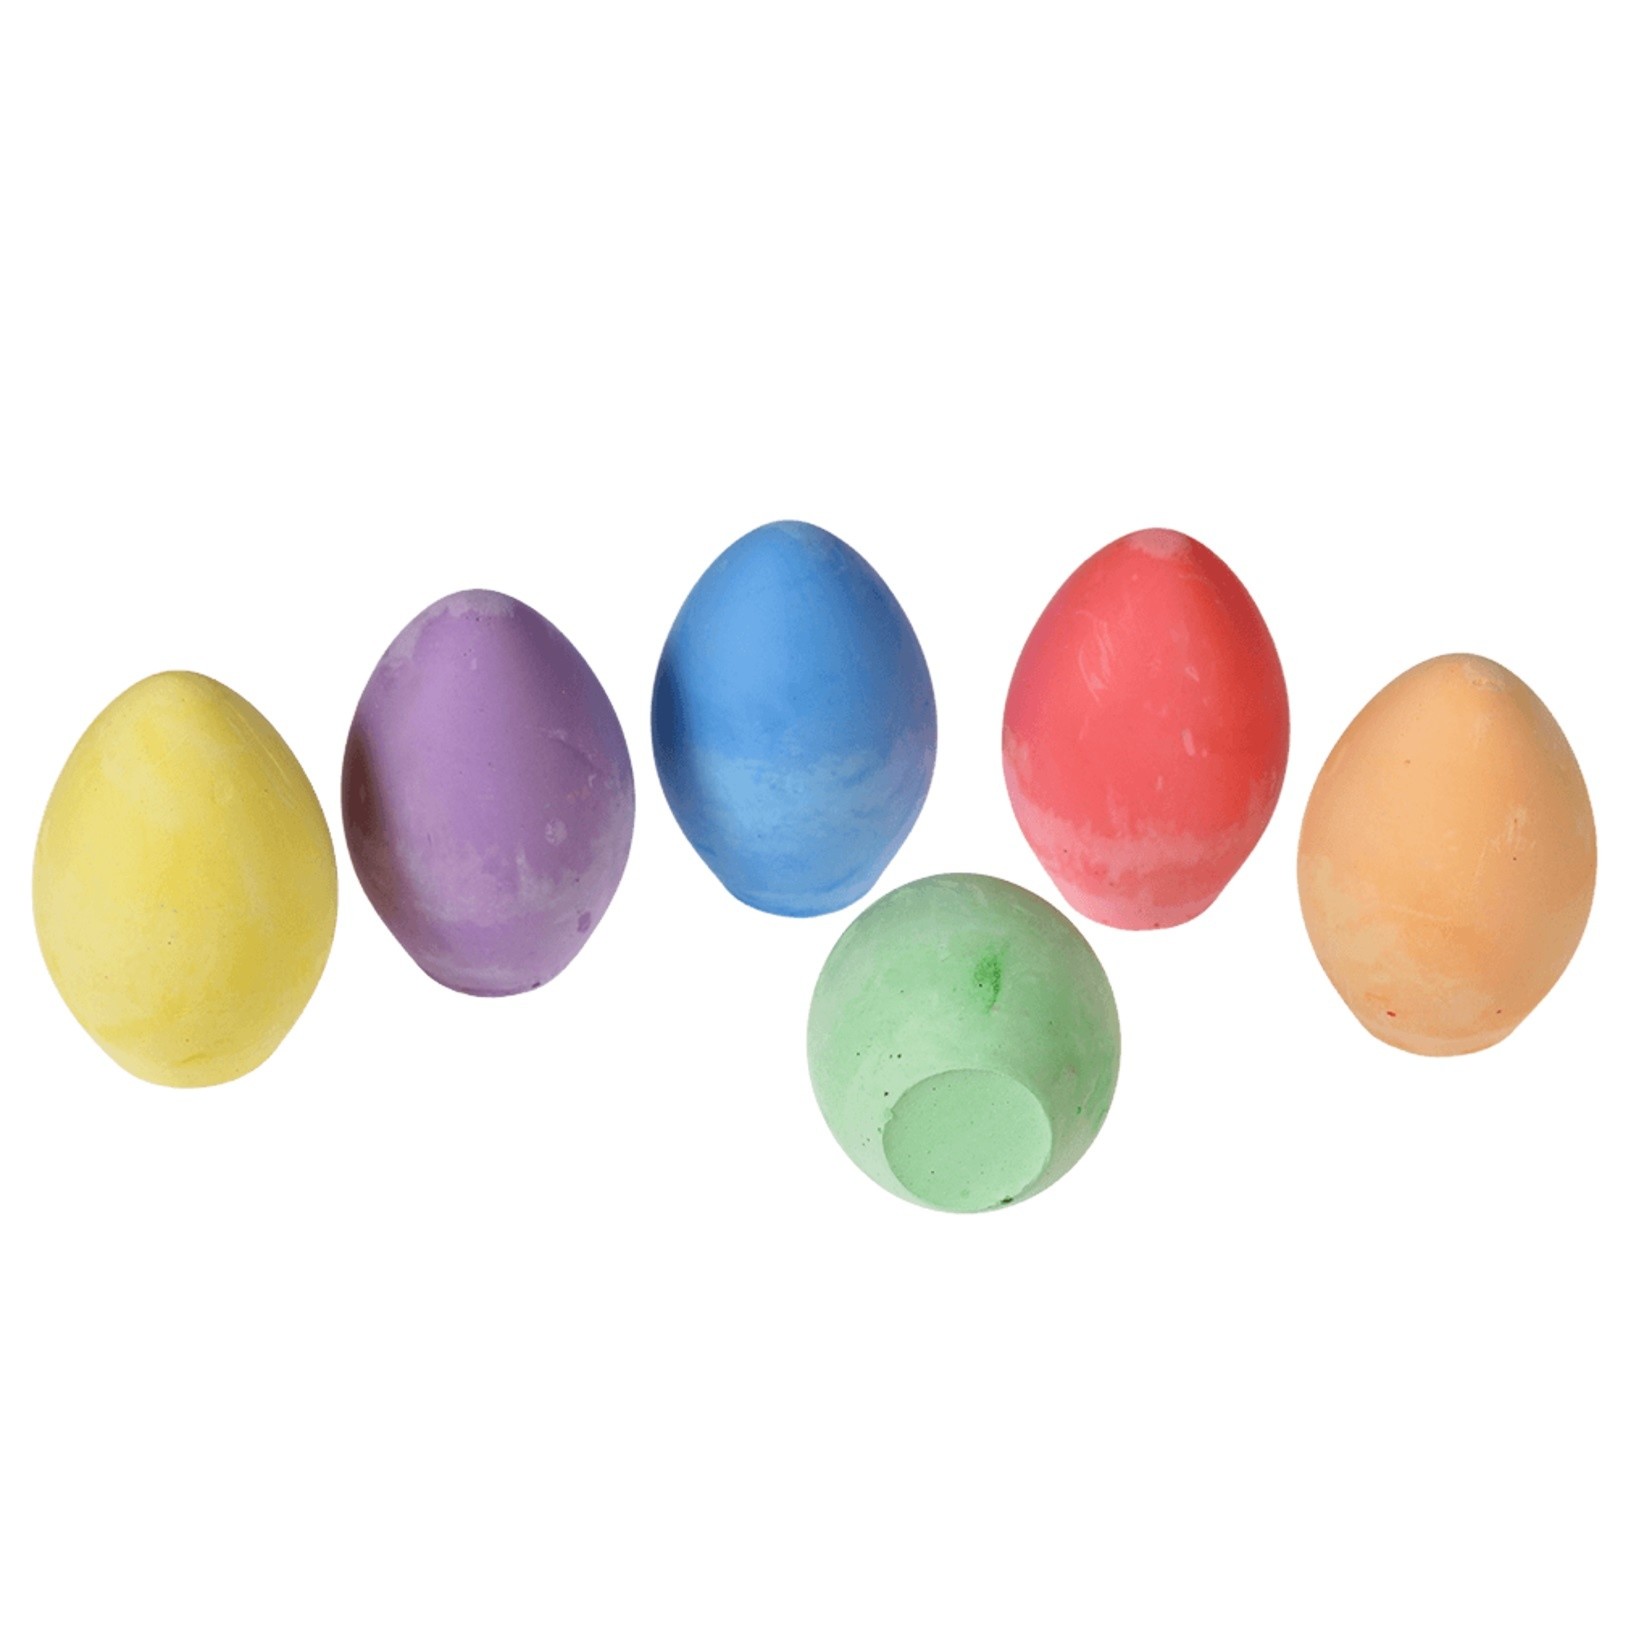 Rex London Gekleurde Stoepkrijt Eieren - 6 stks